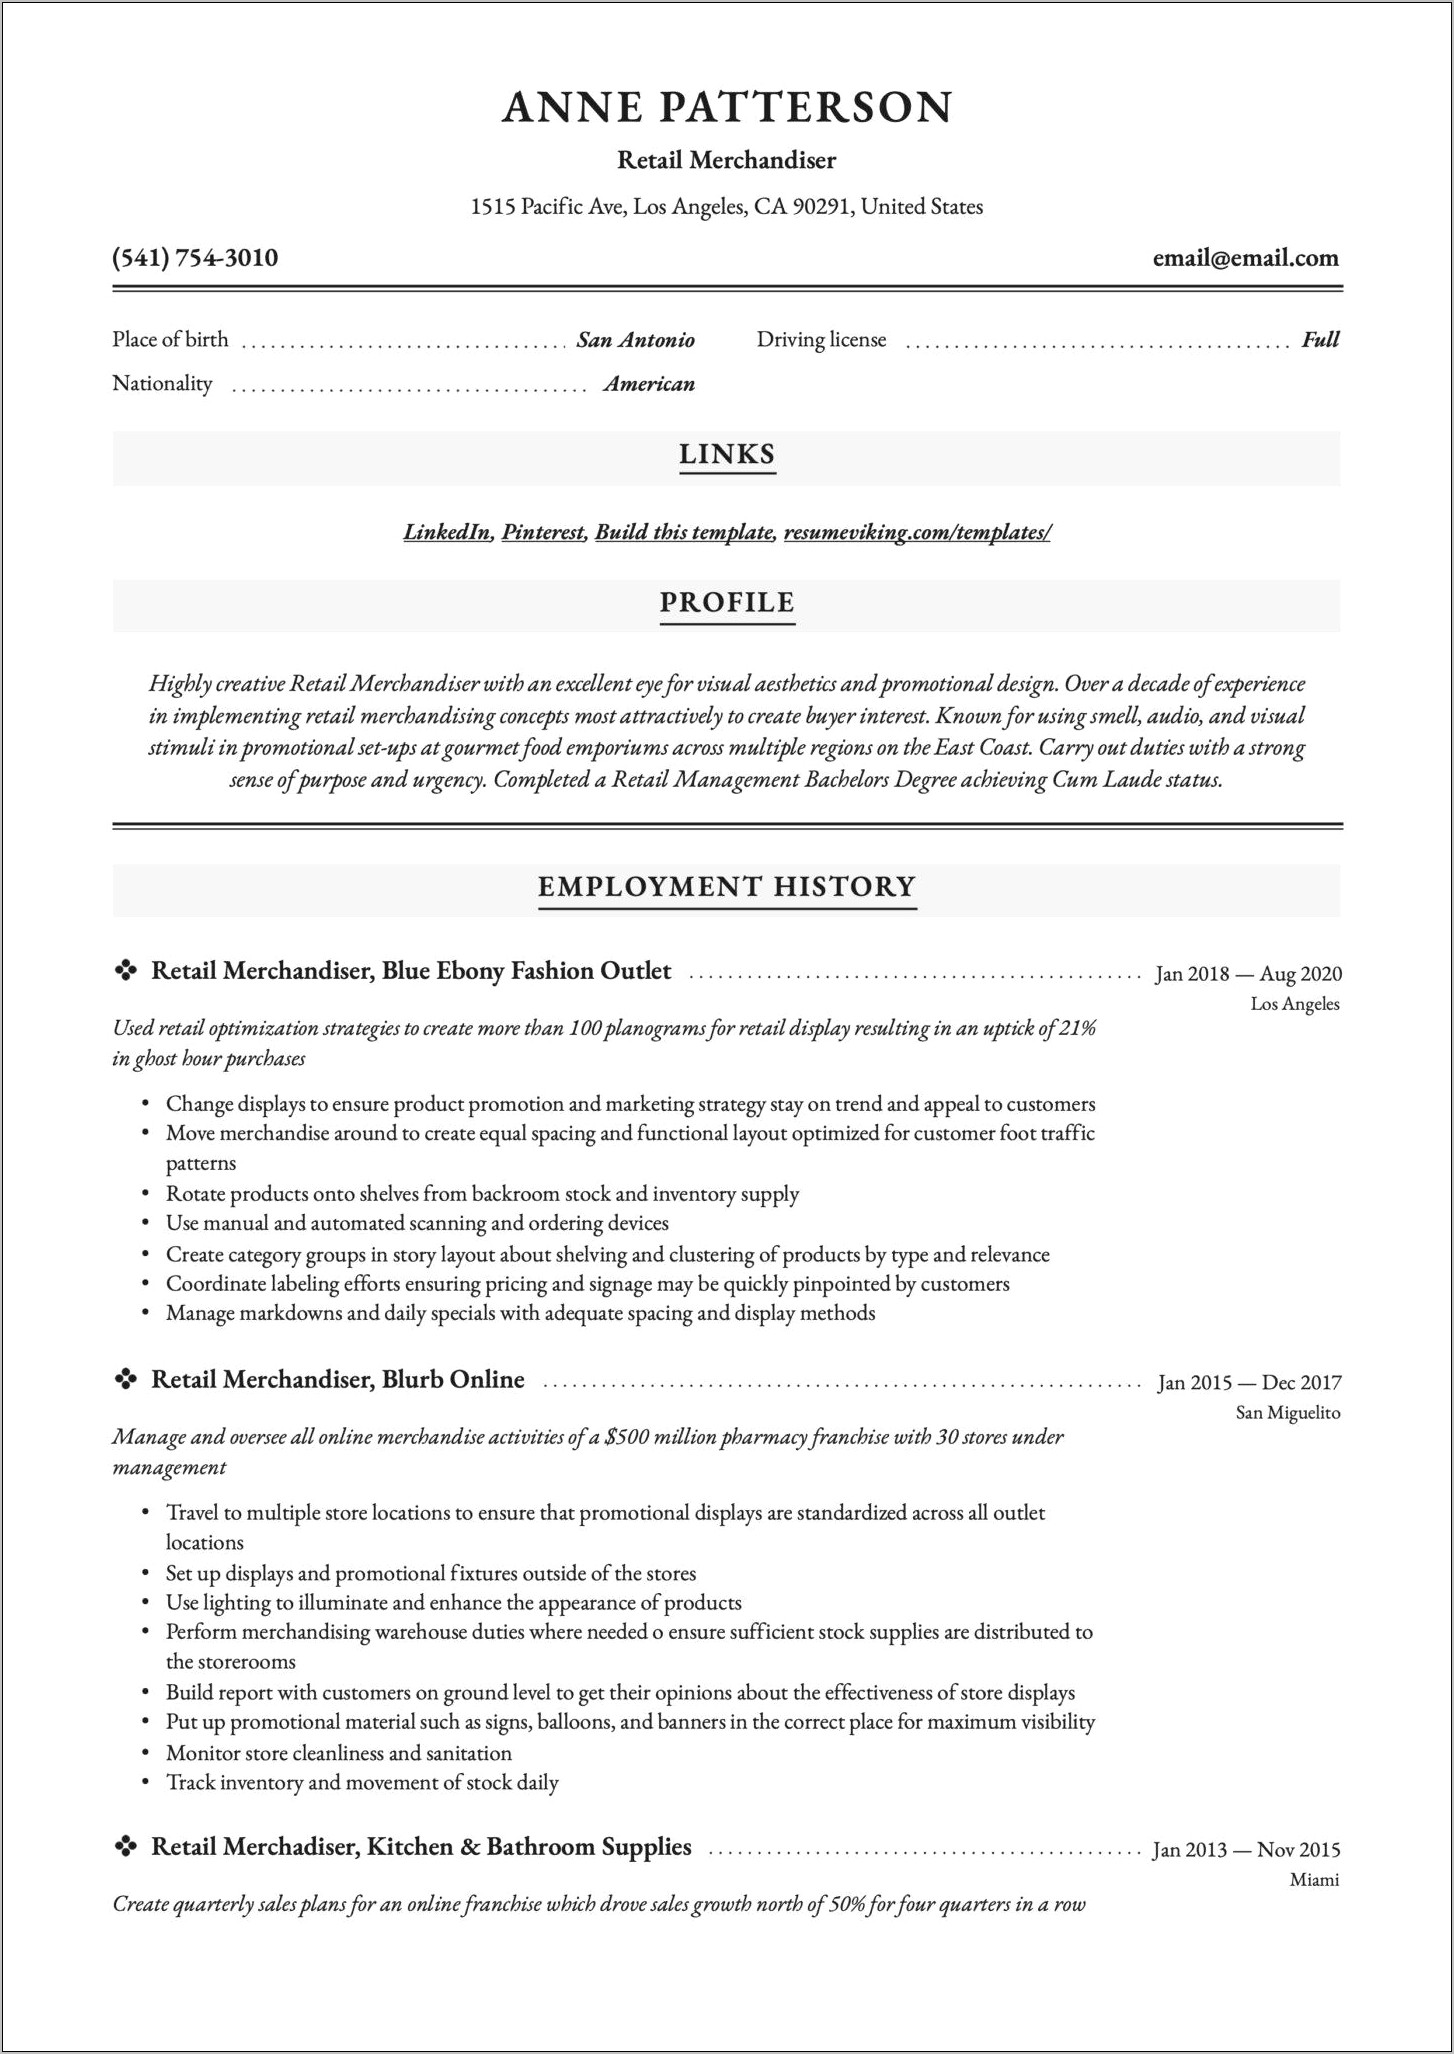 Example Resume For Pepsi Merchandiser